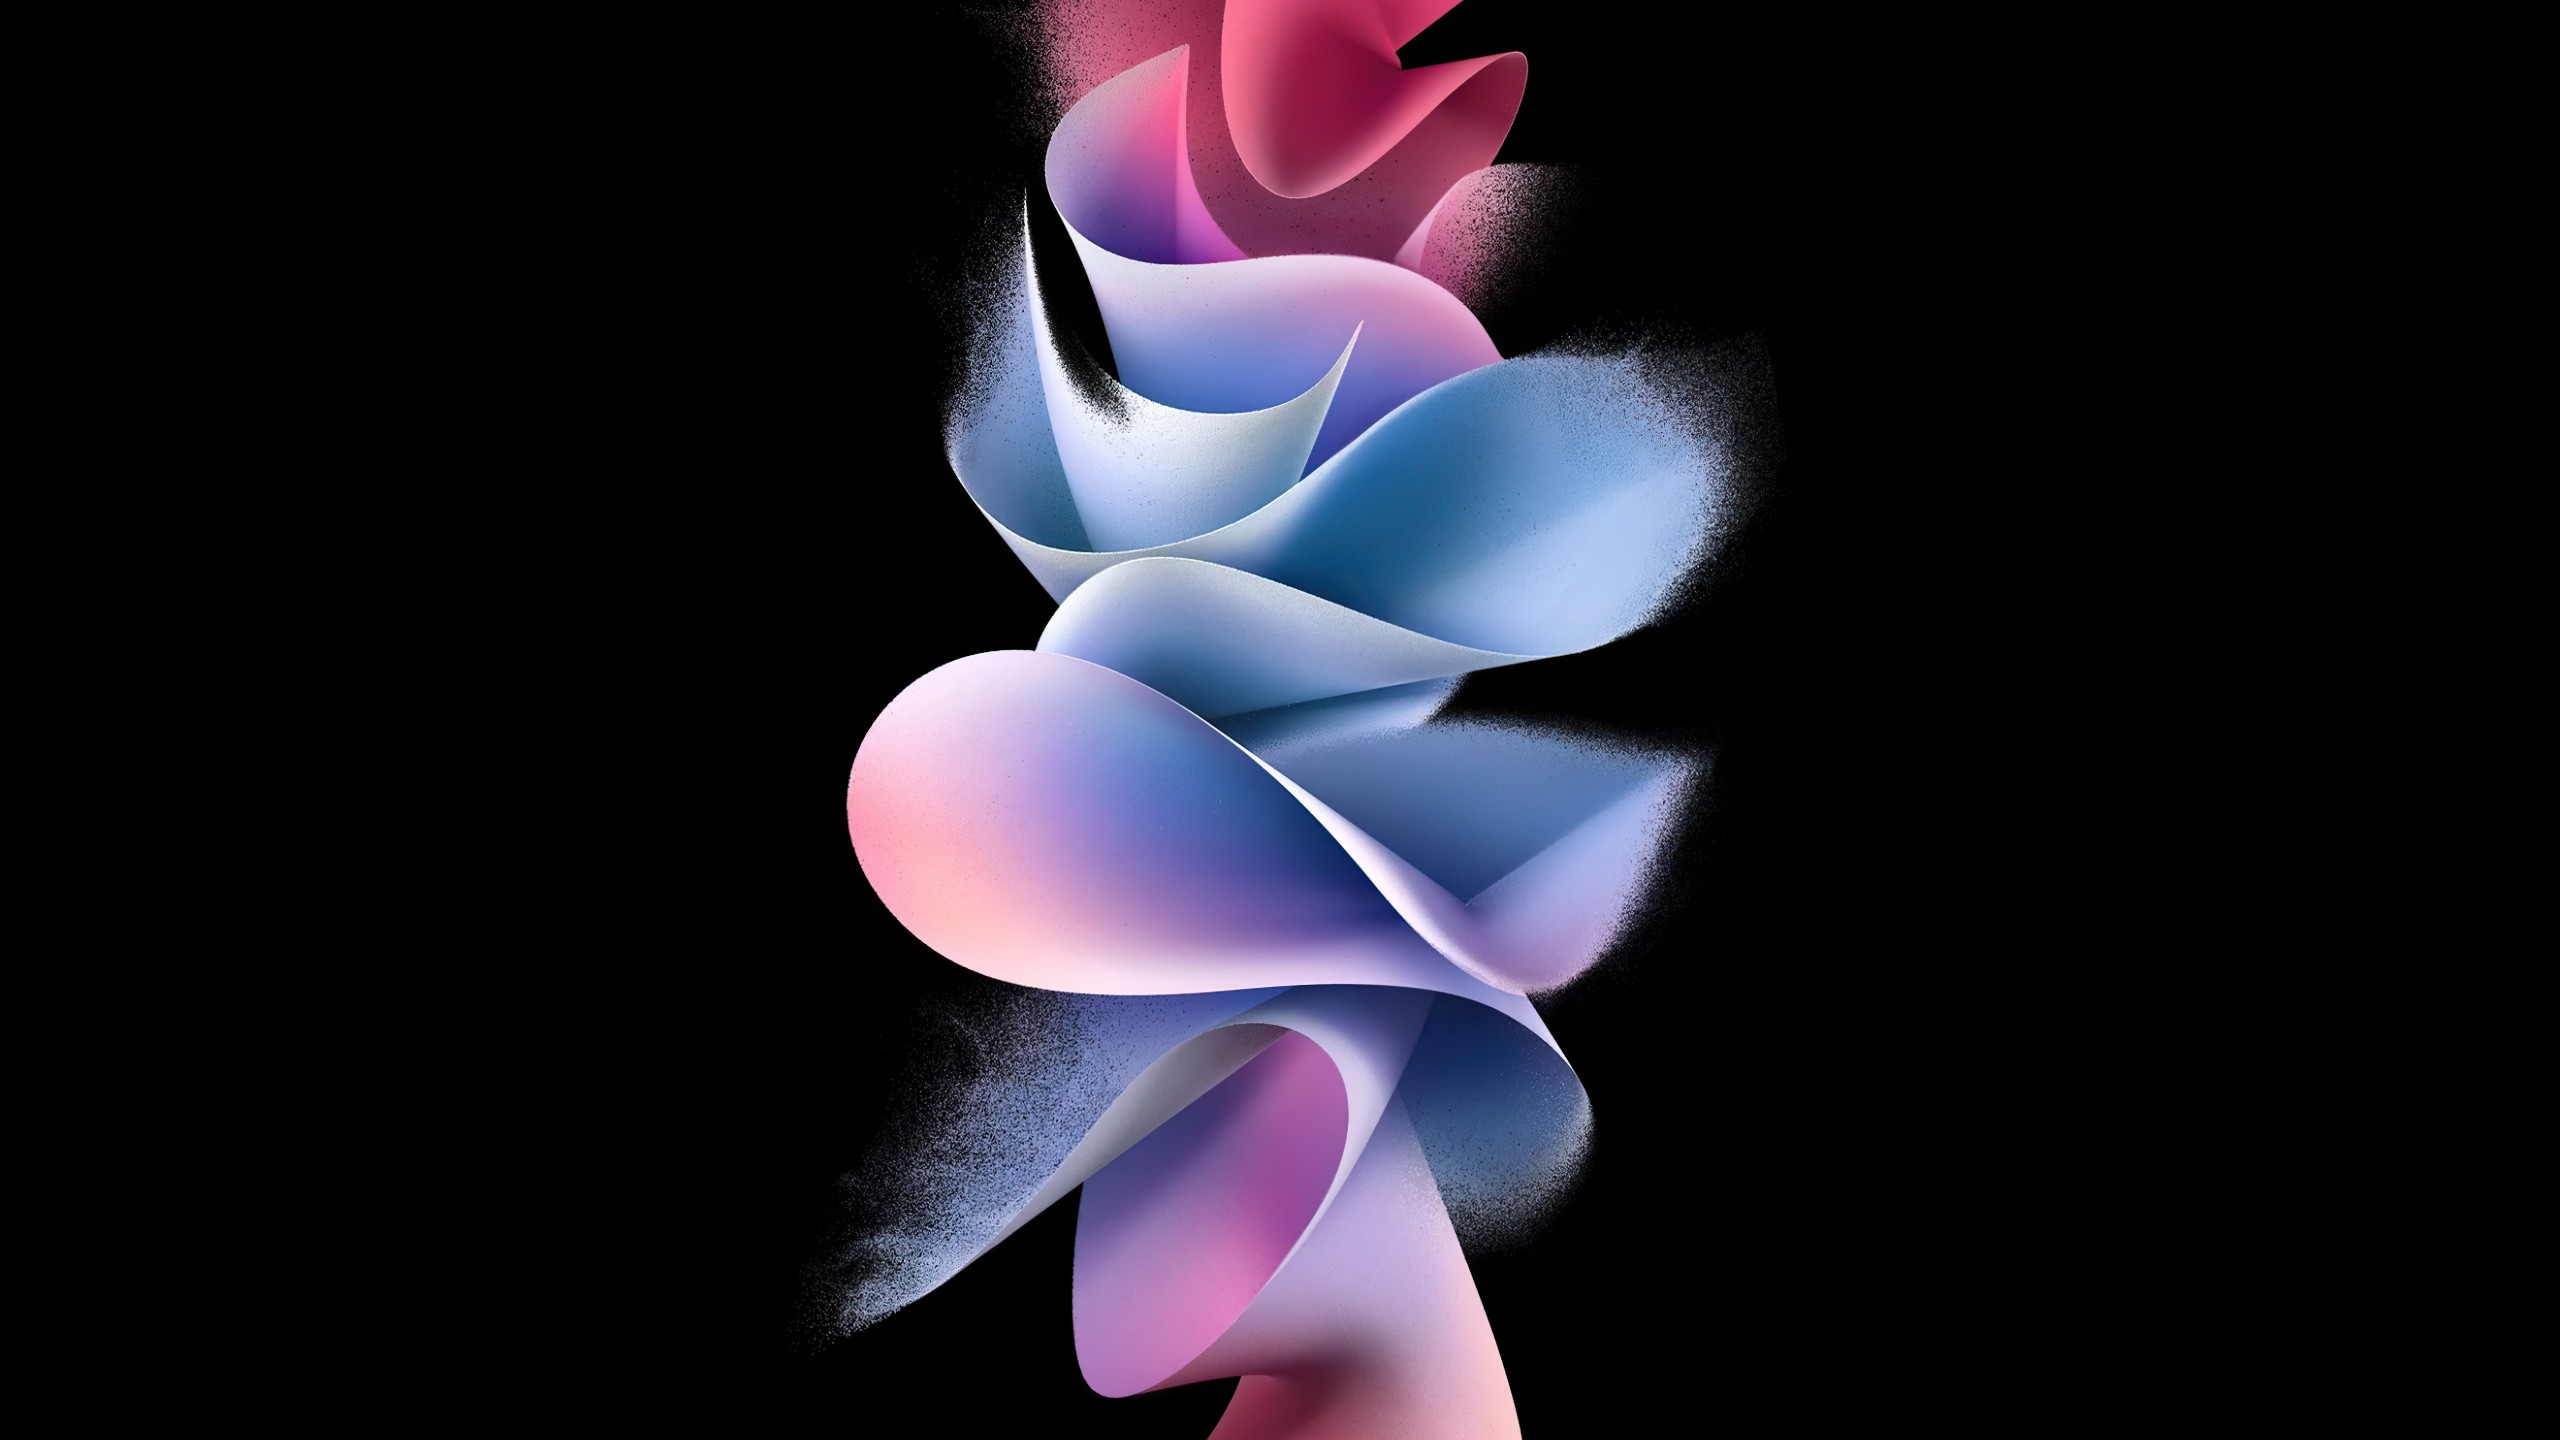 Insane abstract beauty on Samsung Galaxy Z Flip 3 wallpaper 2560x1440